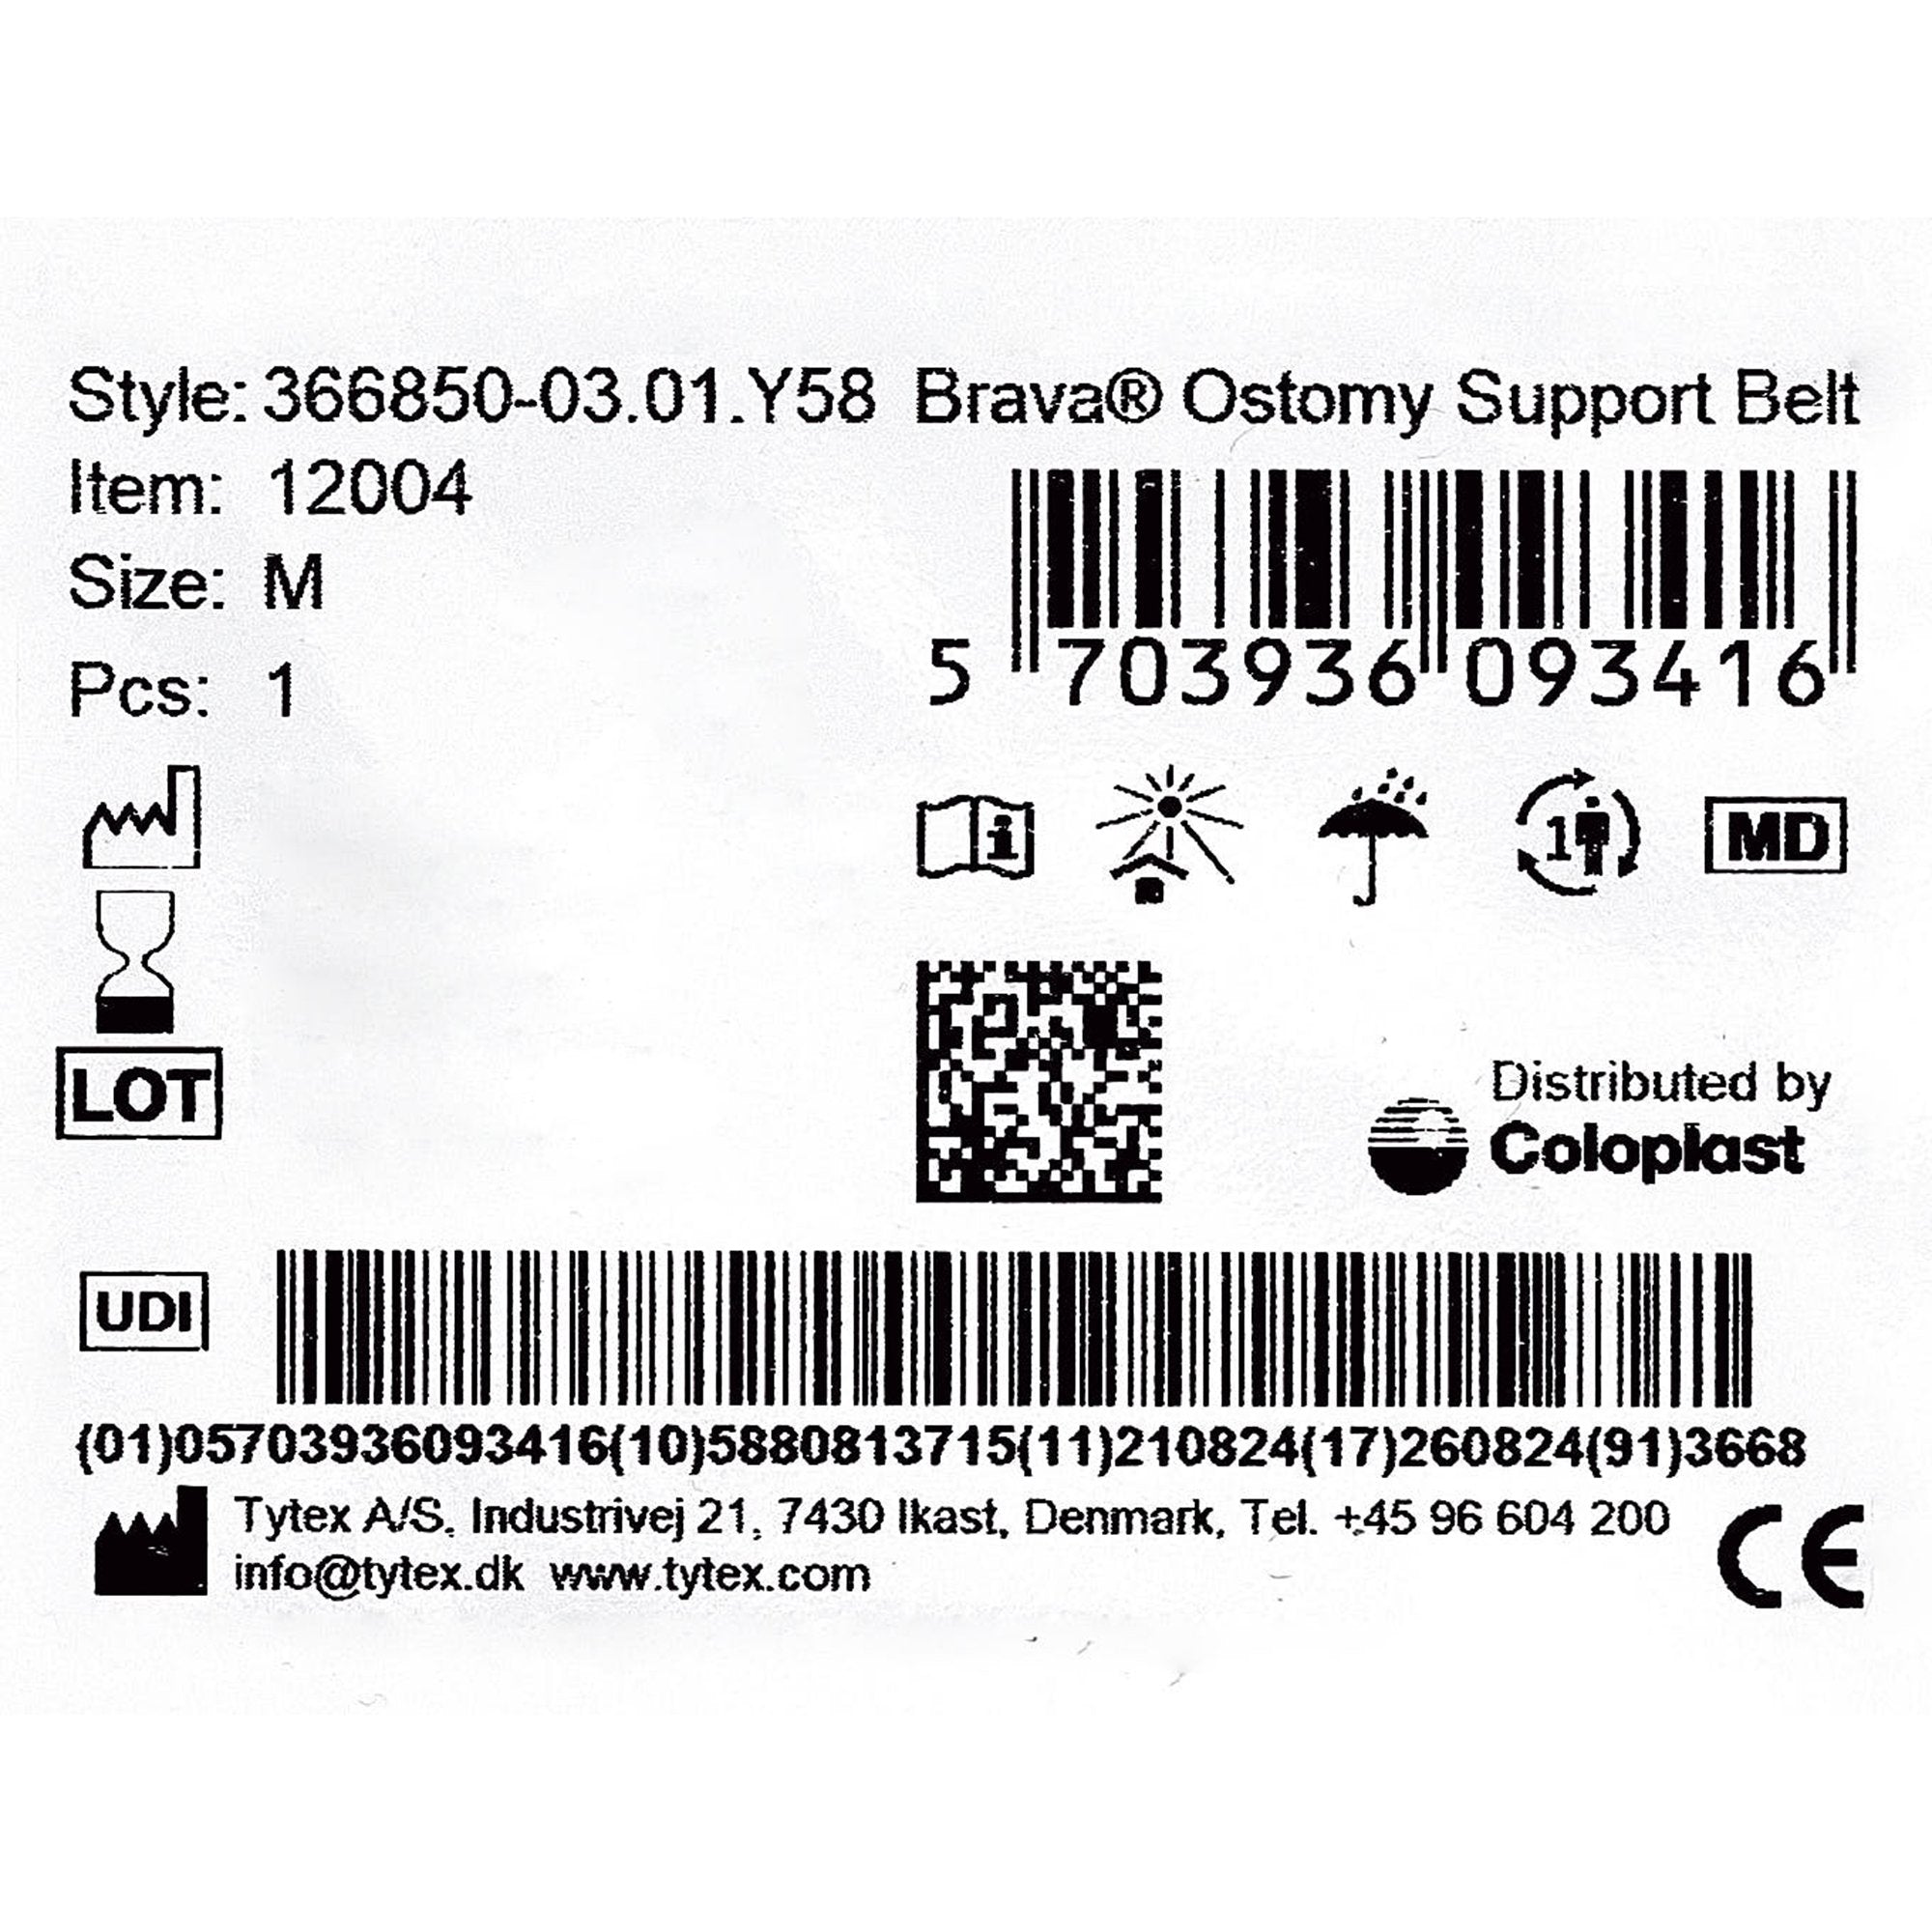 Ostomy Support Belt Brava® Medium, 31 to 35 Inch Waist, White